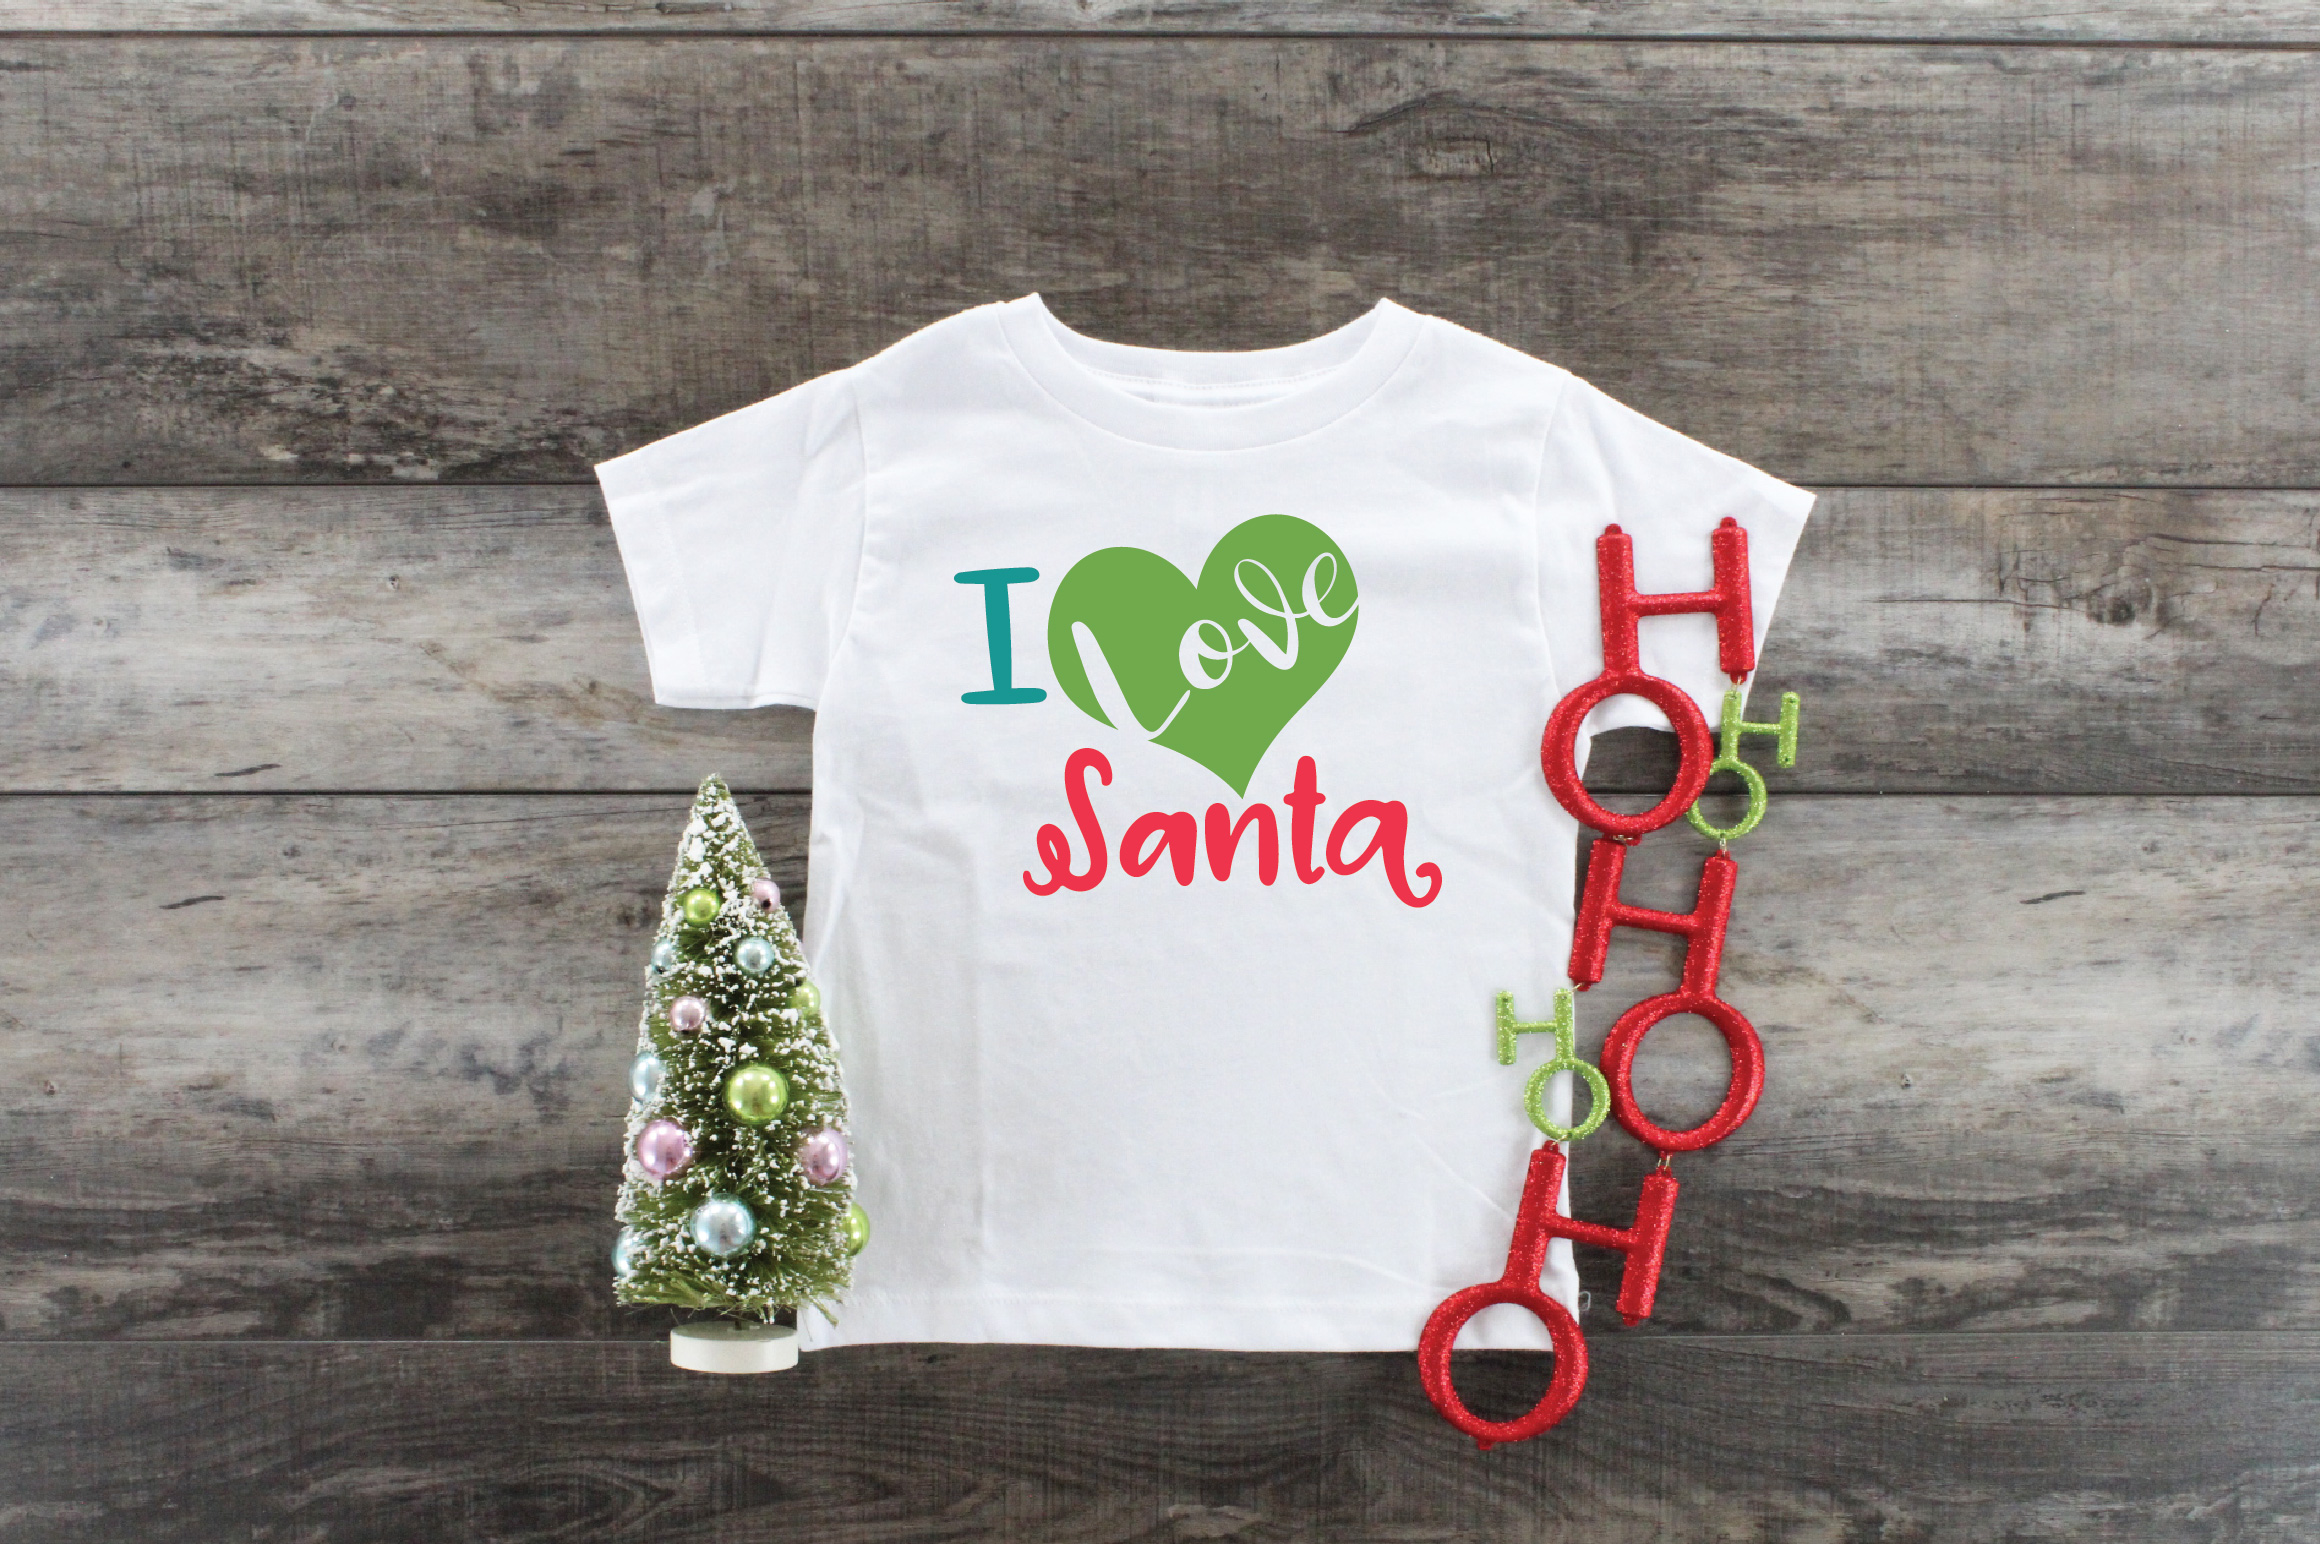 I Love Santa - Christmas SVG Cut File - DXF PNG EPS JPG AI ...